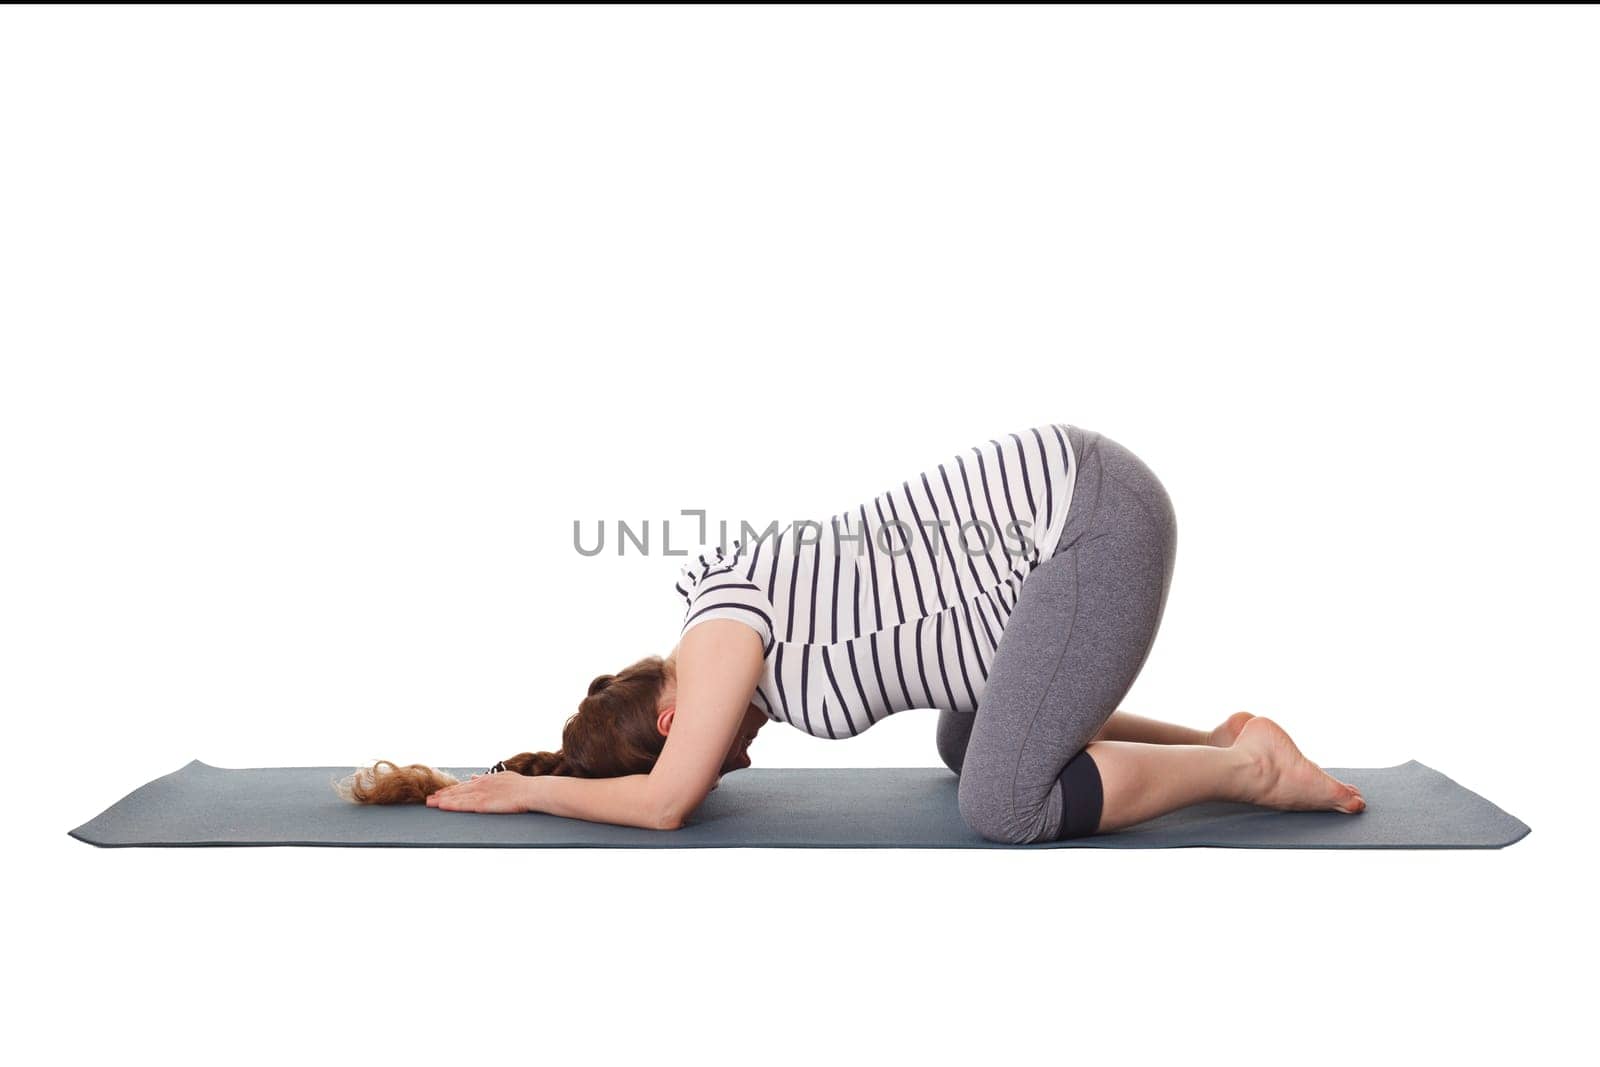 Pregnancy yoga exercise - pregnant woman doing asana Balasana - child s pose isolated on white background